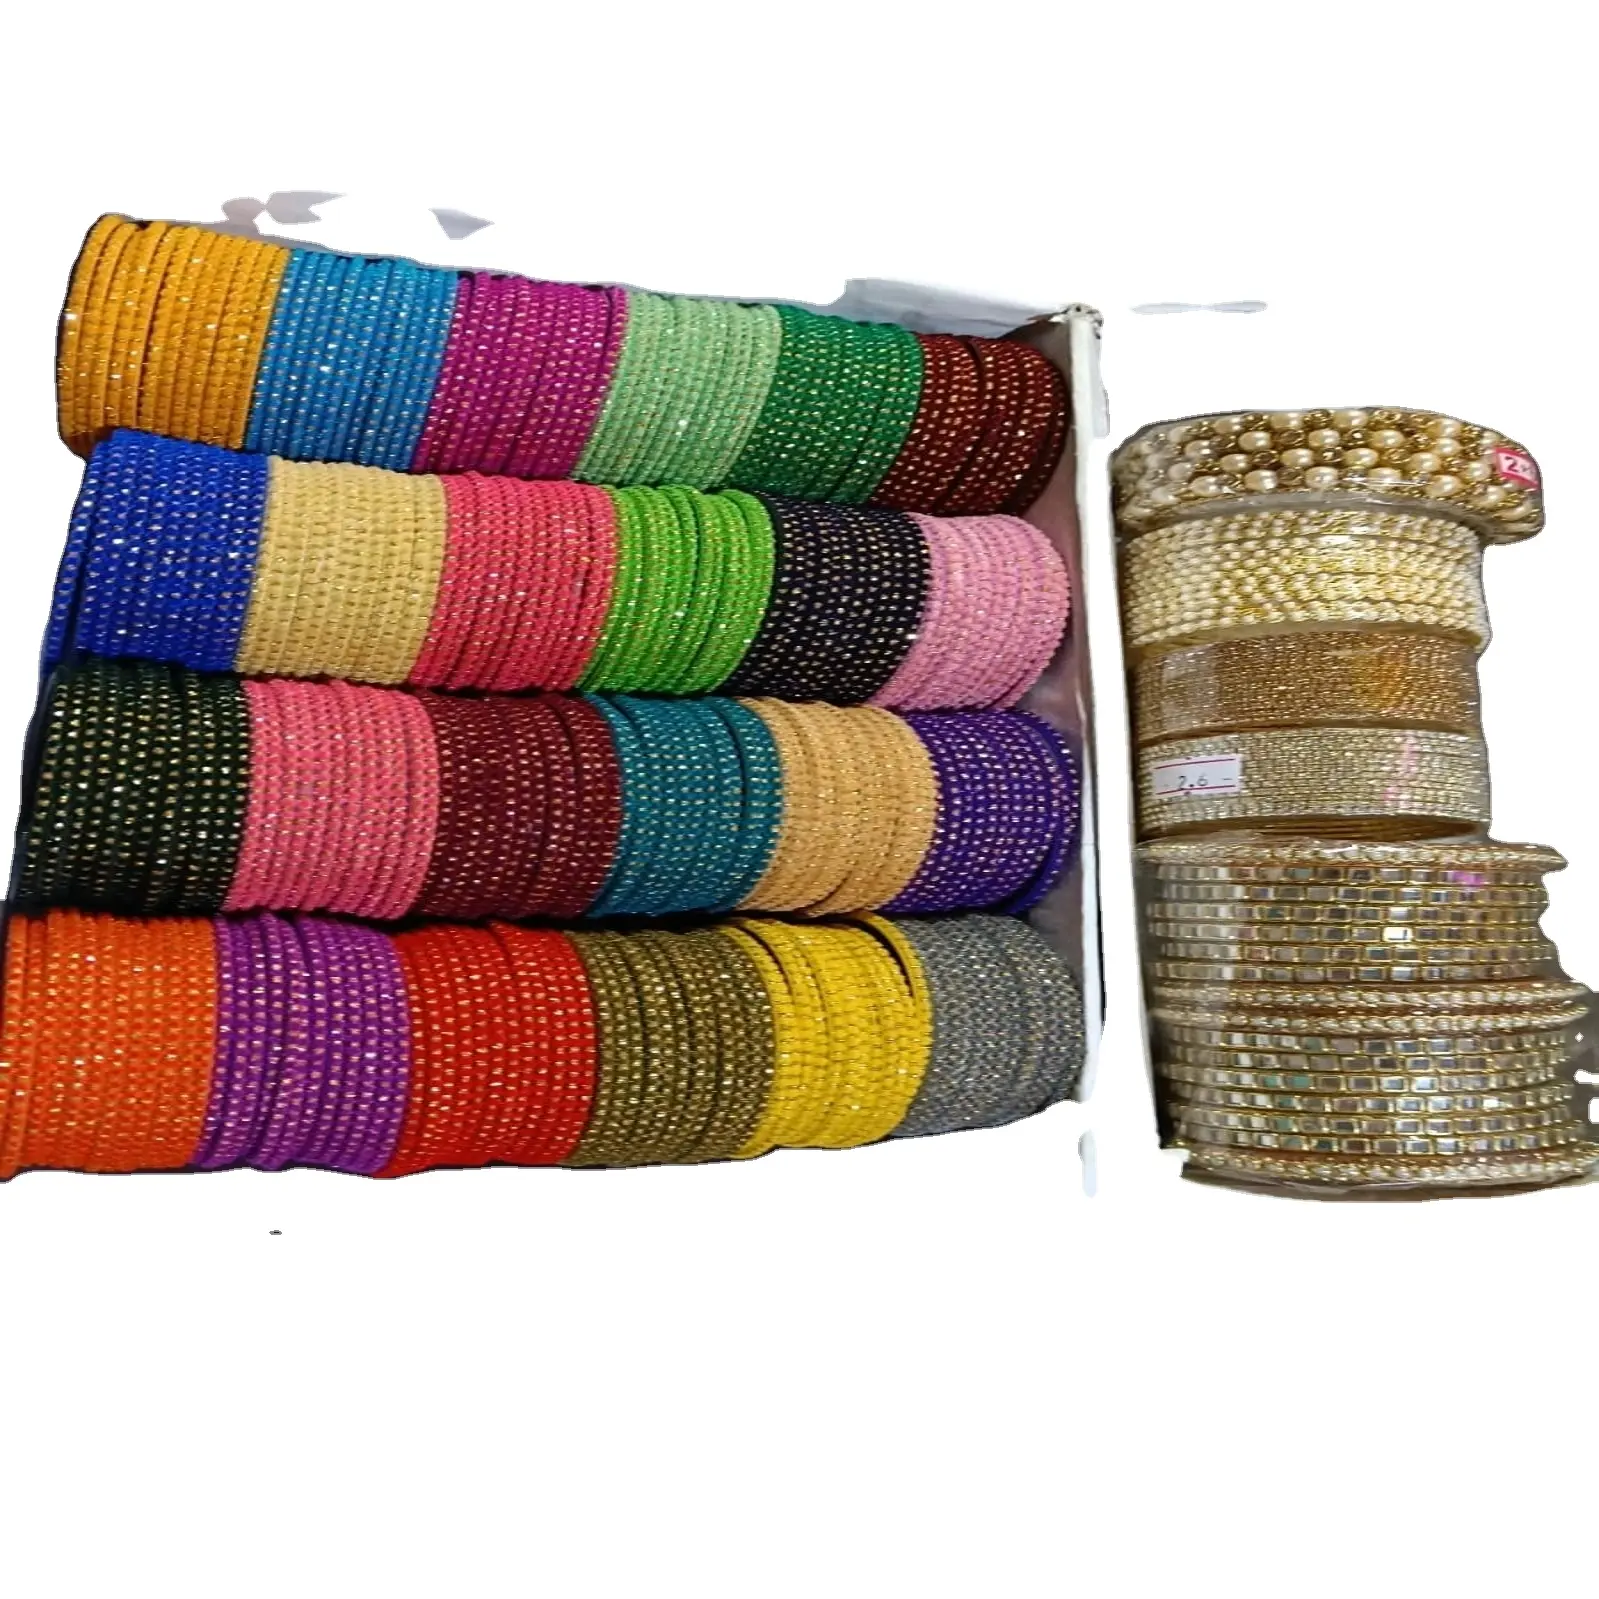 भारतीय पारंपरिक चूड़ी सेट जेड सादे धातु दुल्हन चूड़ी कंगन भारतीय चूड़ी सेट, पूर्ण कॉम्बो बॉक्स 24 रंग